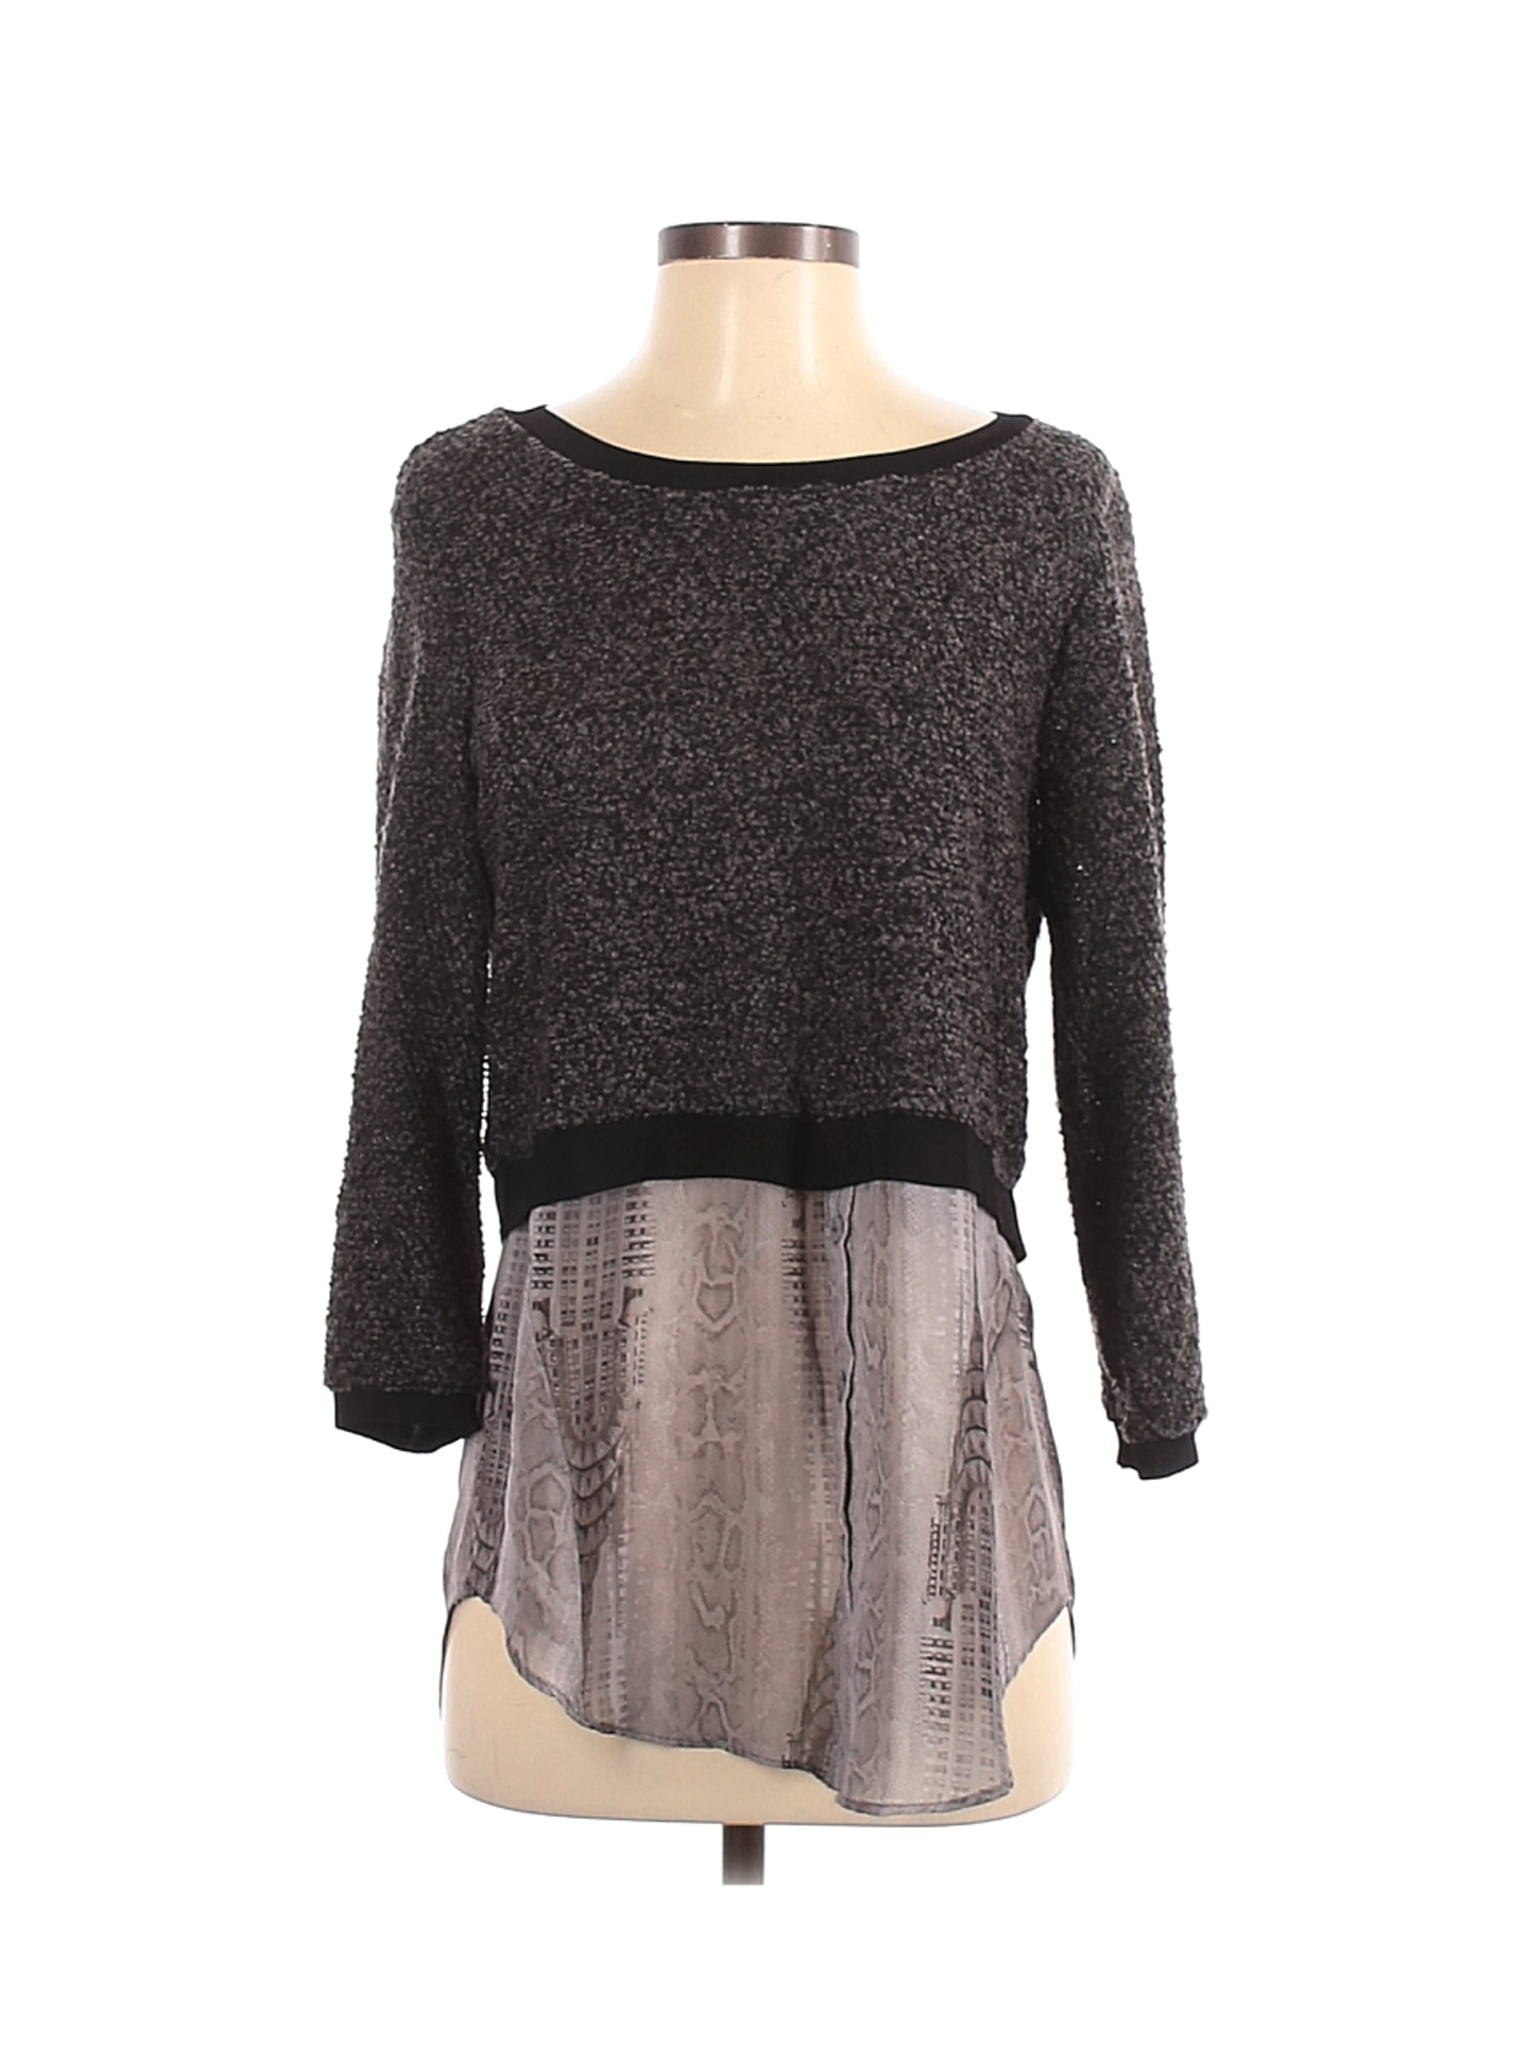 Elie Tahari Women Black Pullover Sweater S | eBay